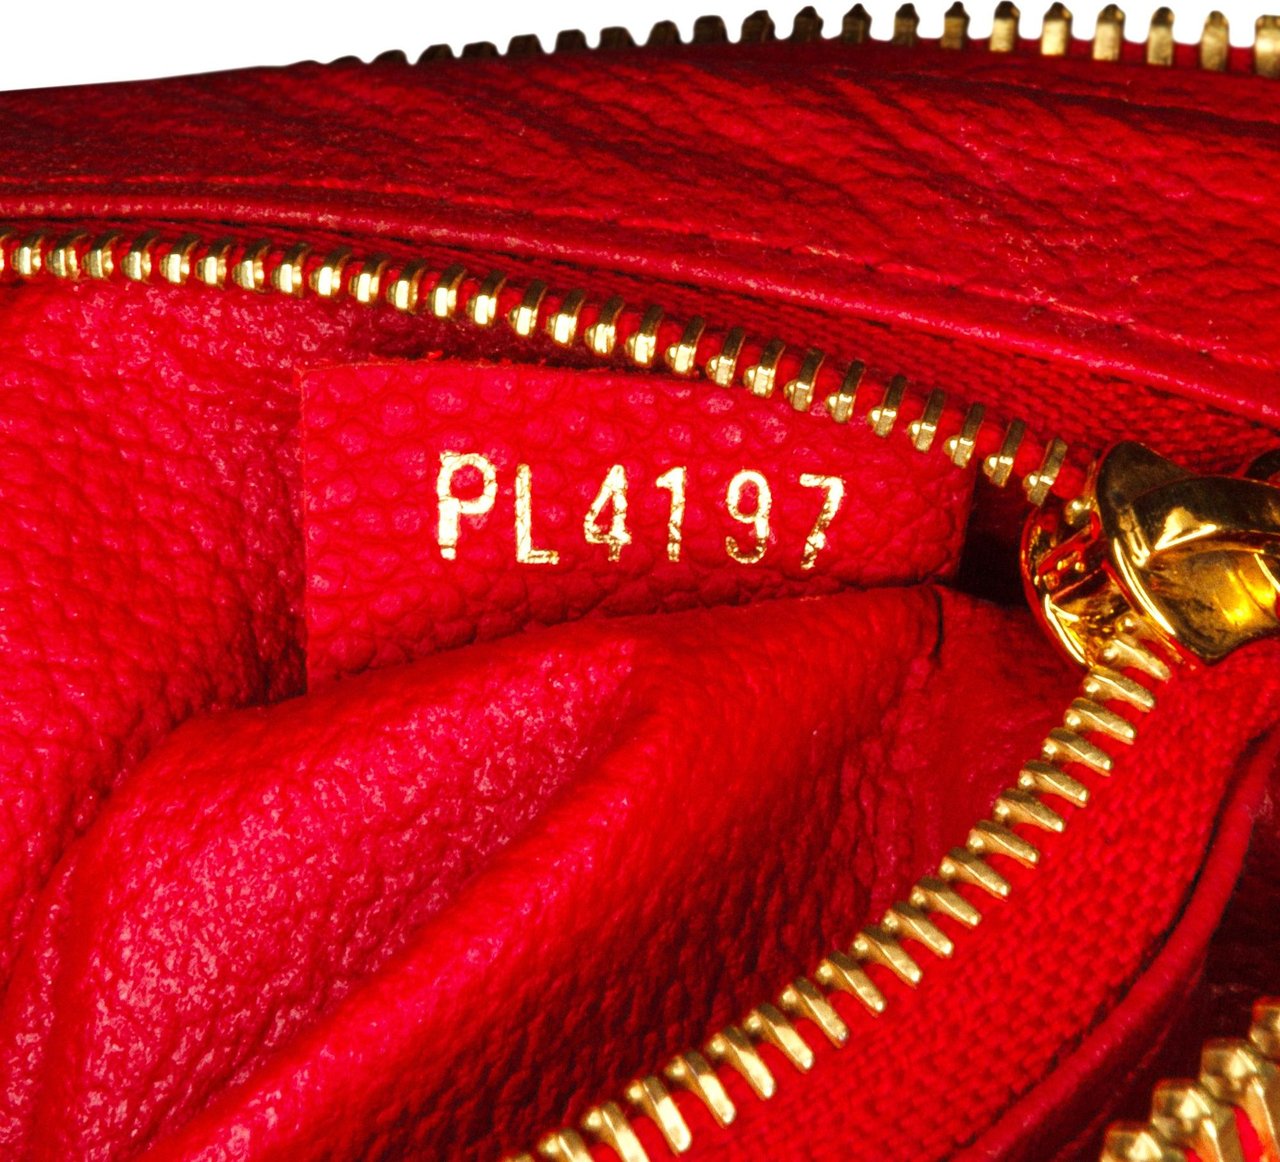 Louis Vuitton Pallas Vanity case 361553